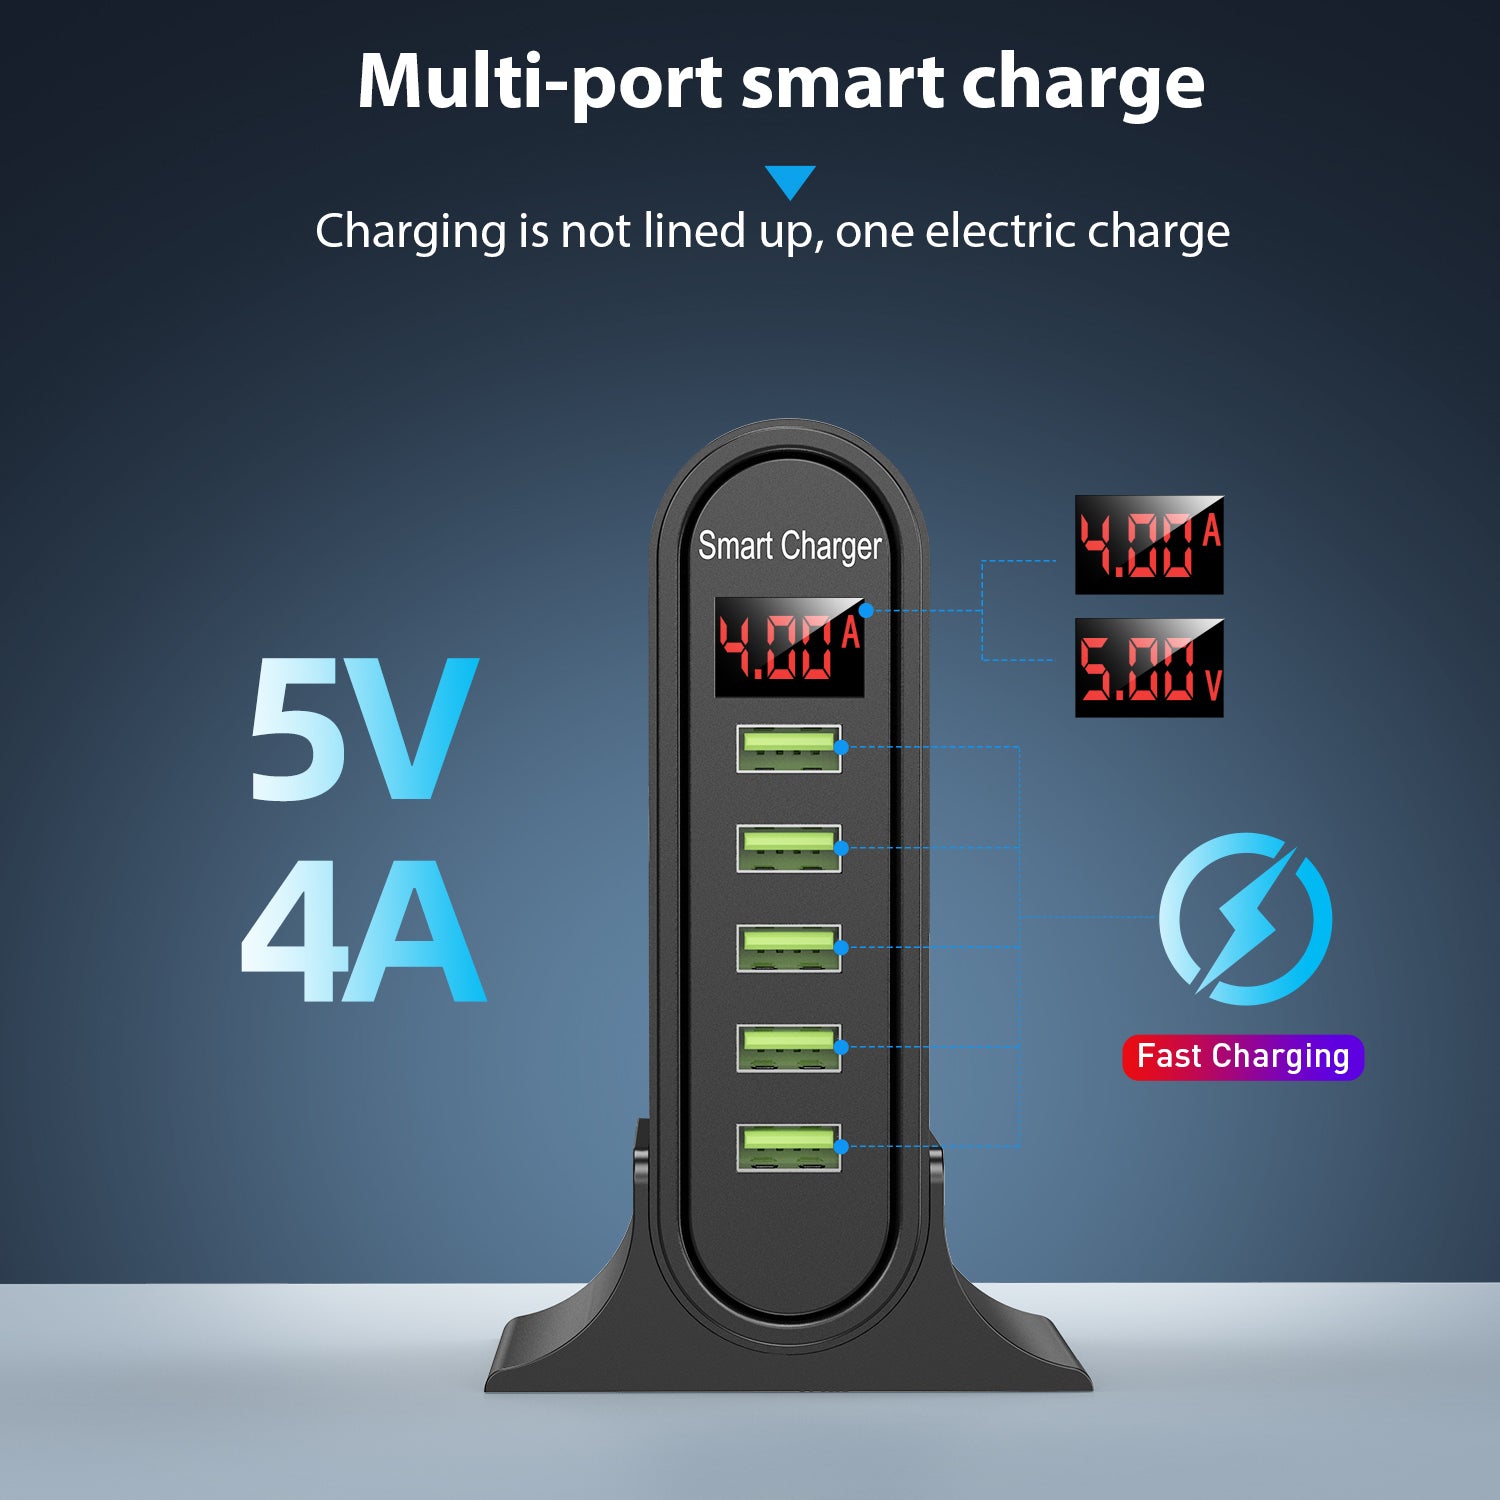 5 Ports USB Charging Dock Station